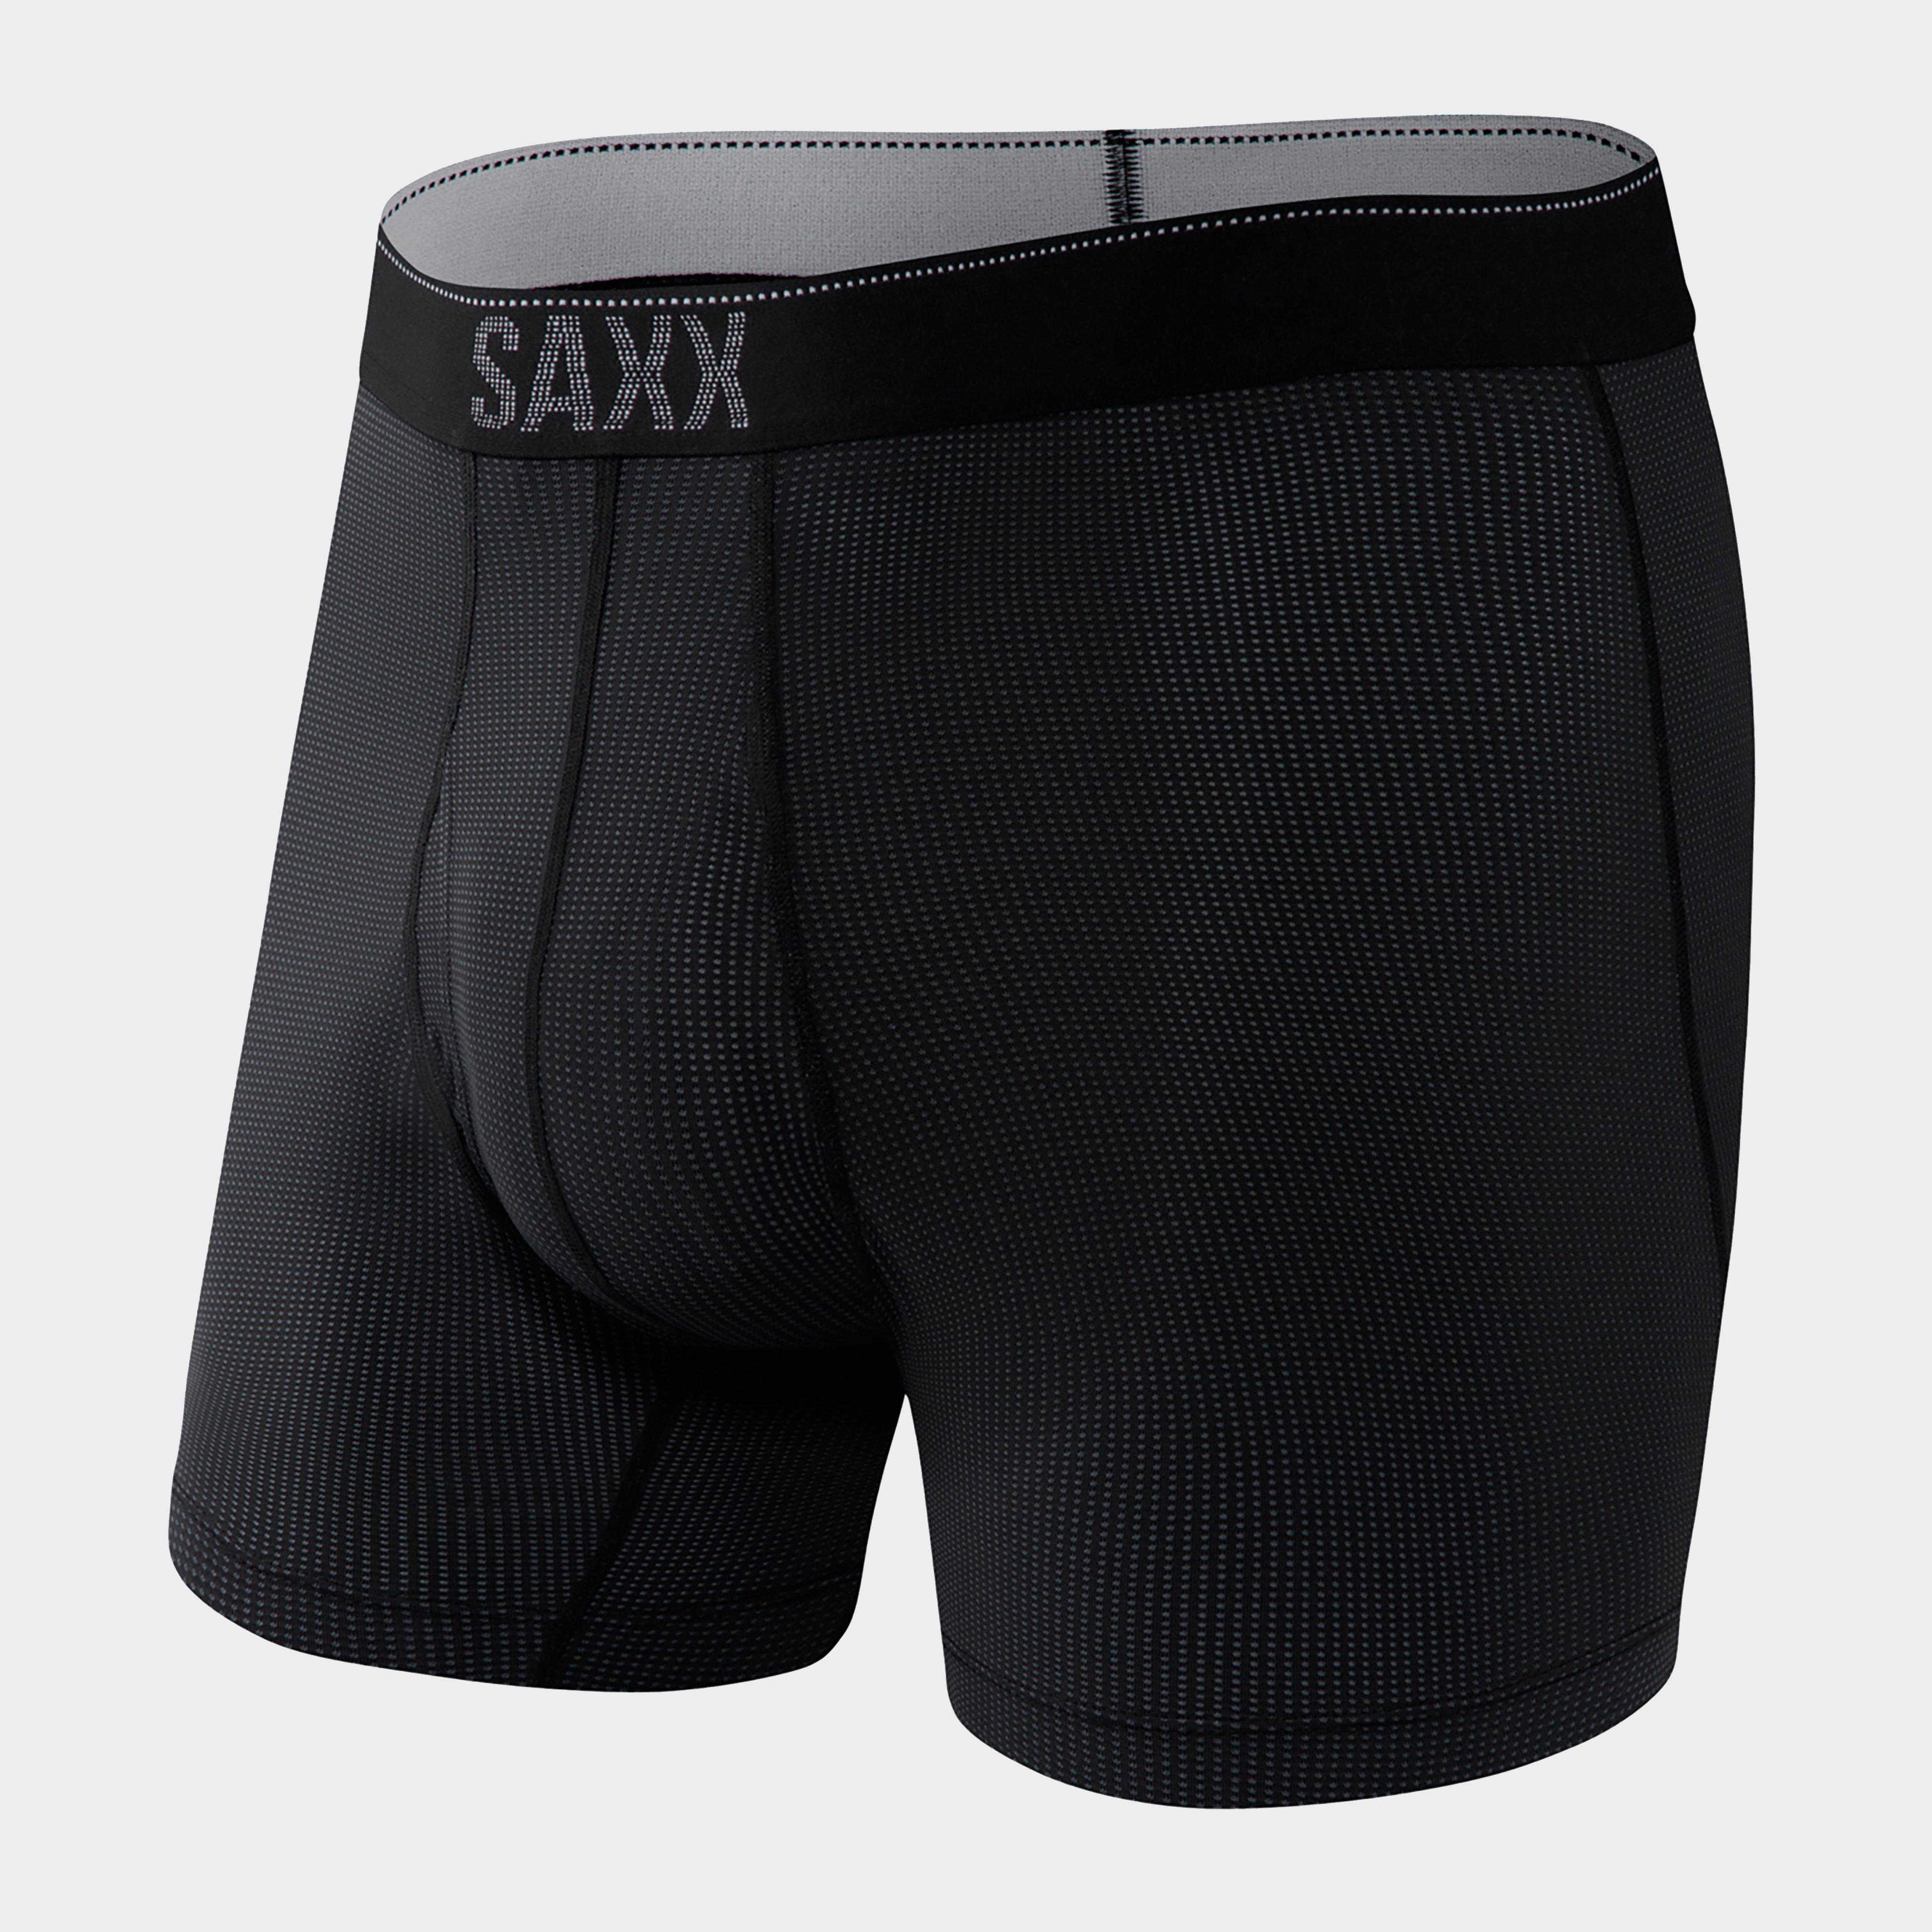 Saxx Men's Quest Boxer Brief, Black from Blacks